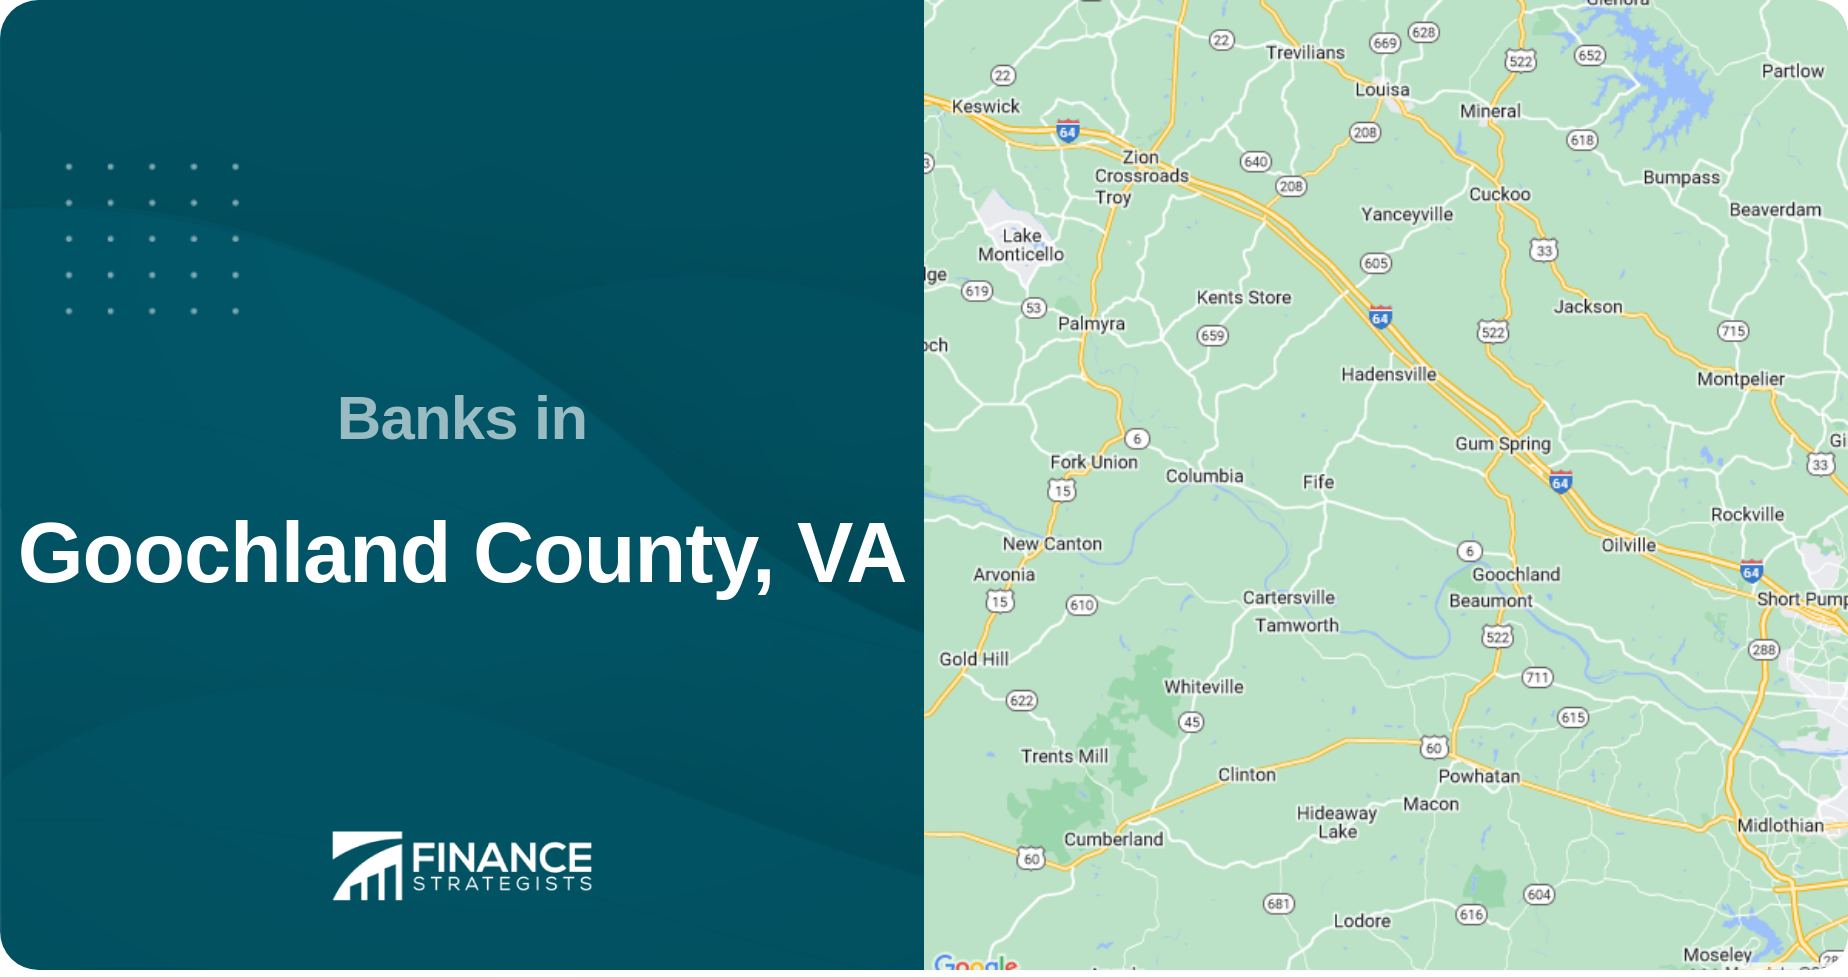 Banks in Goochland County, VA